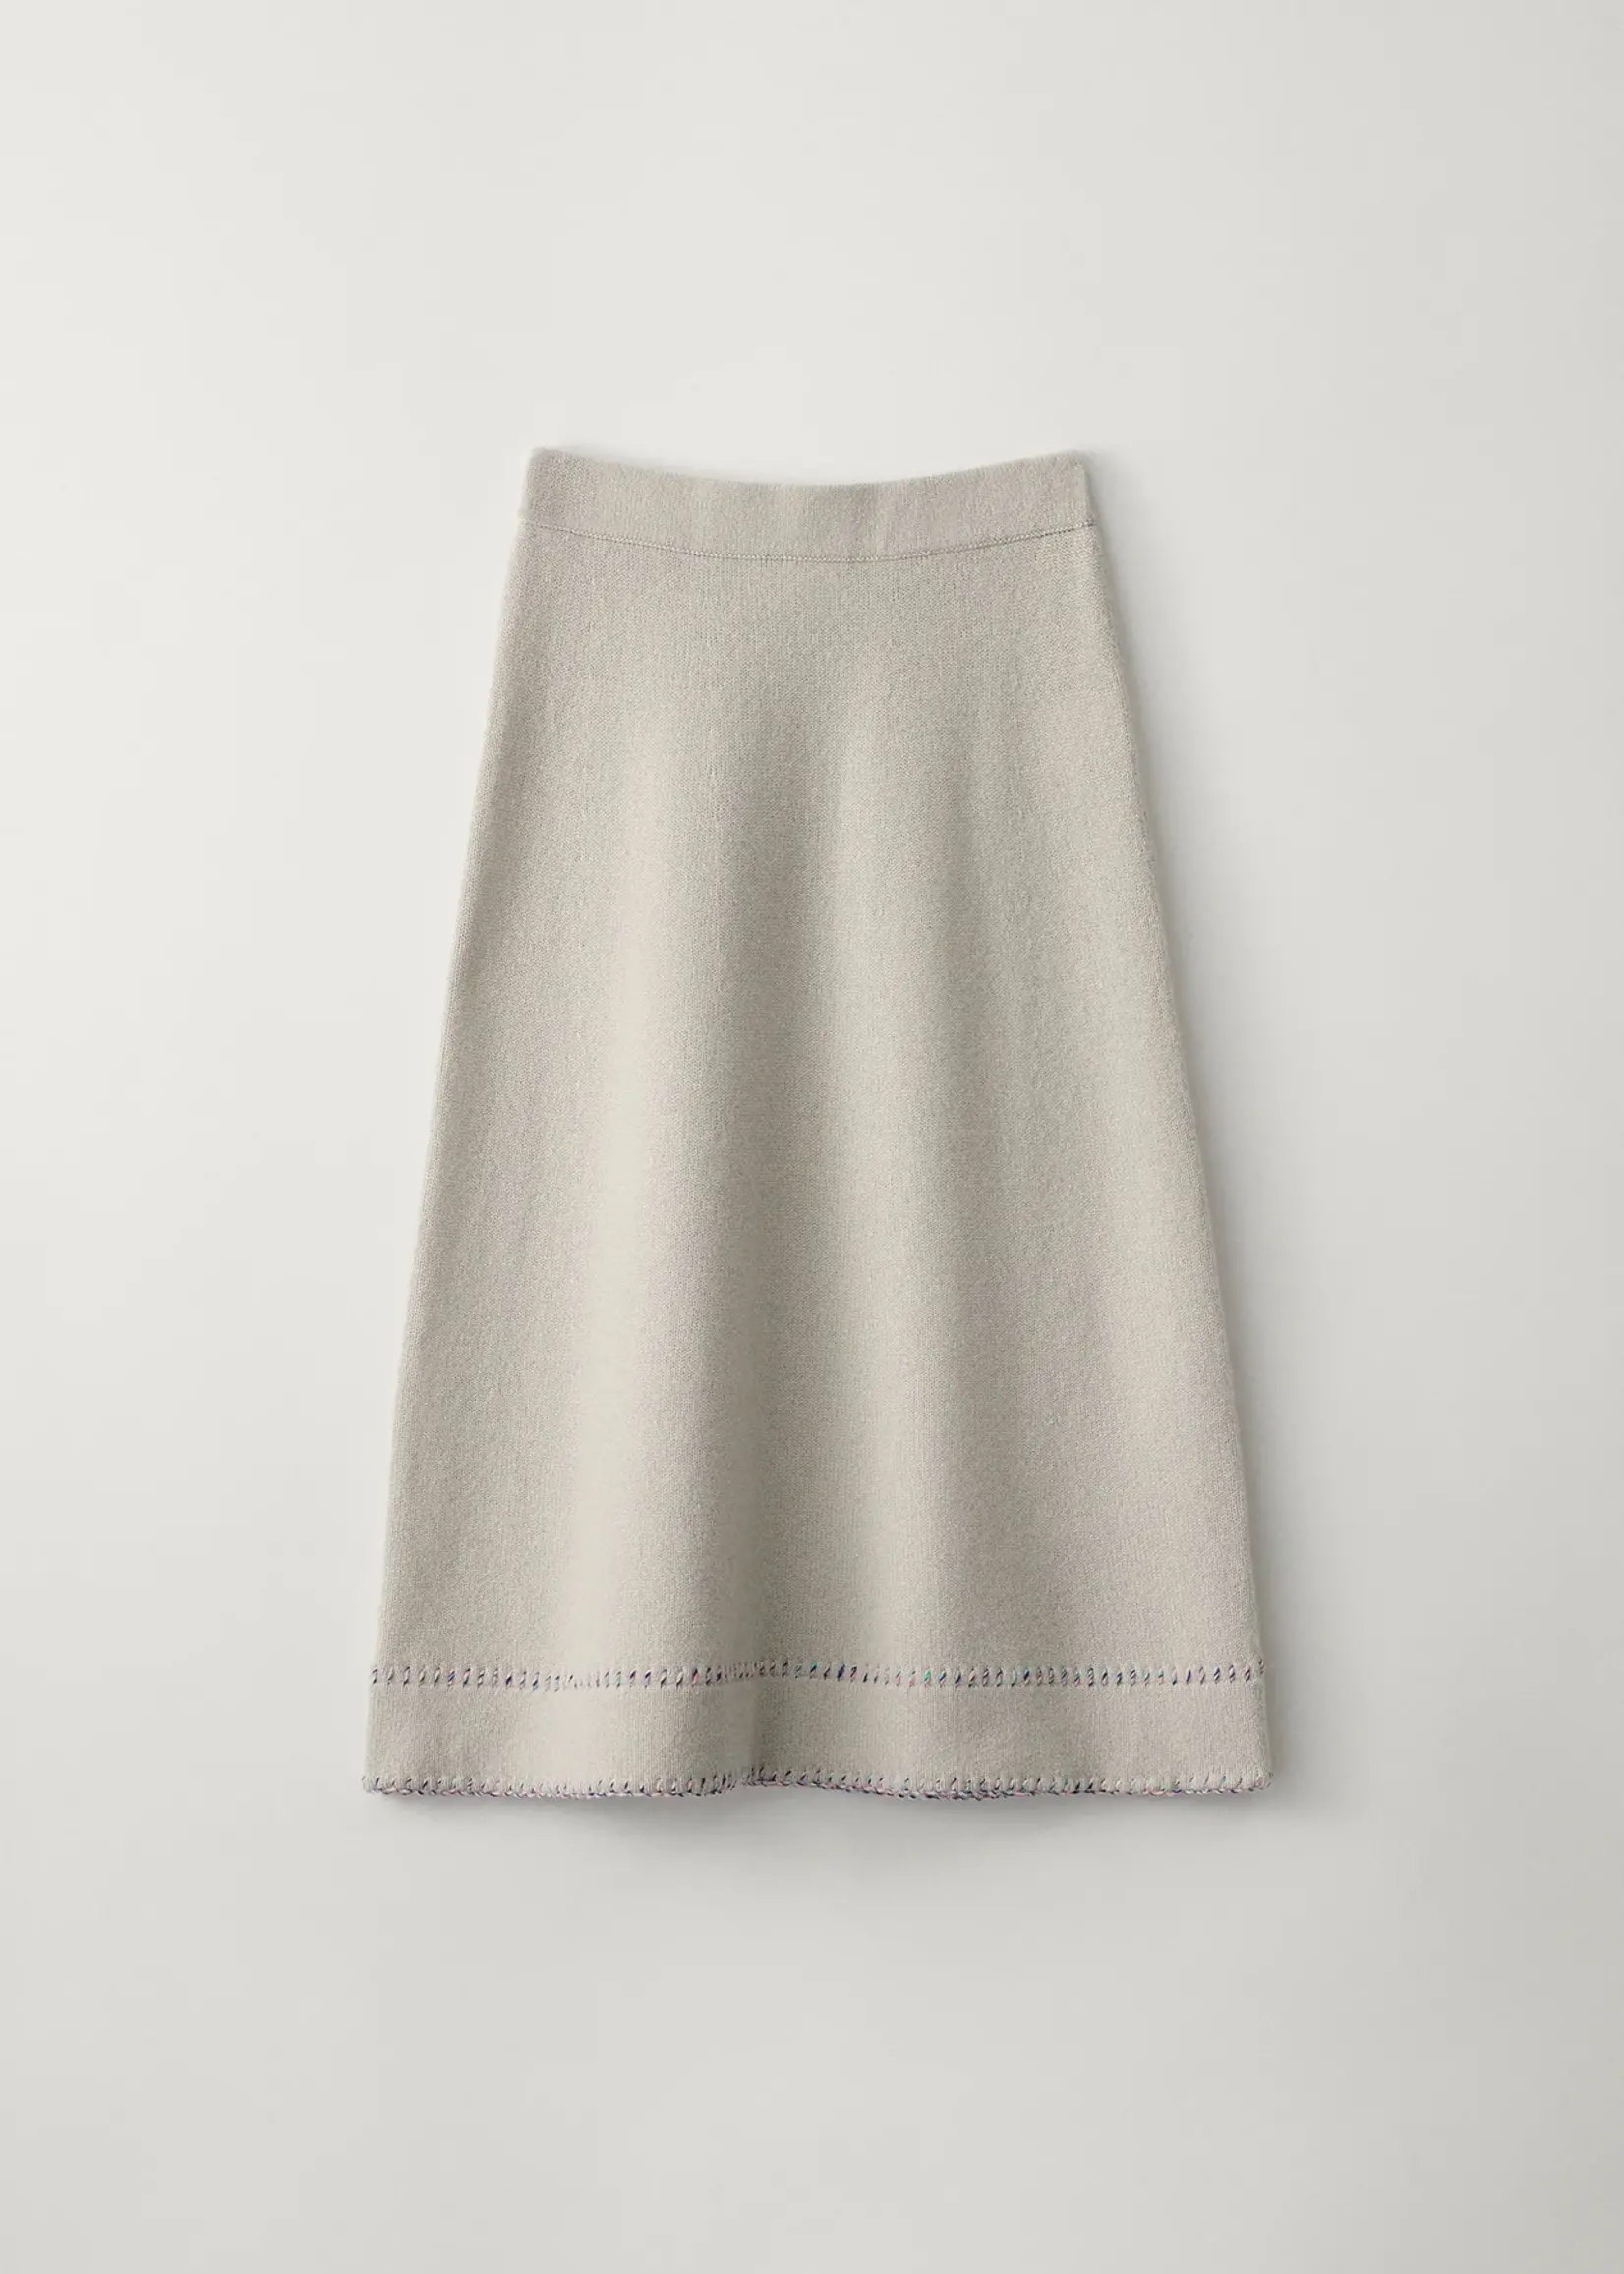 Lisa Yang Adele skirt - Cream/Multi-stitch